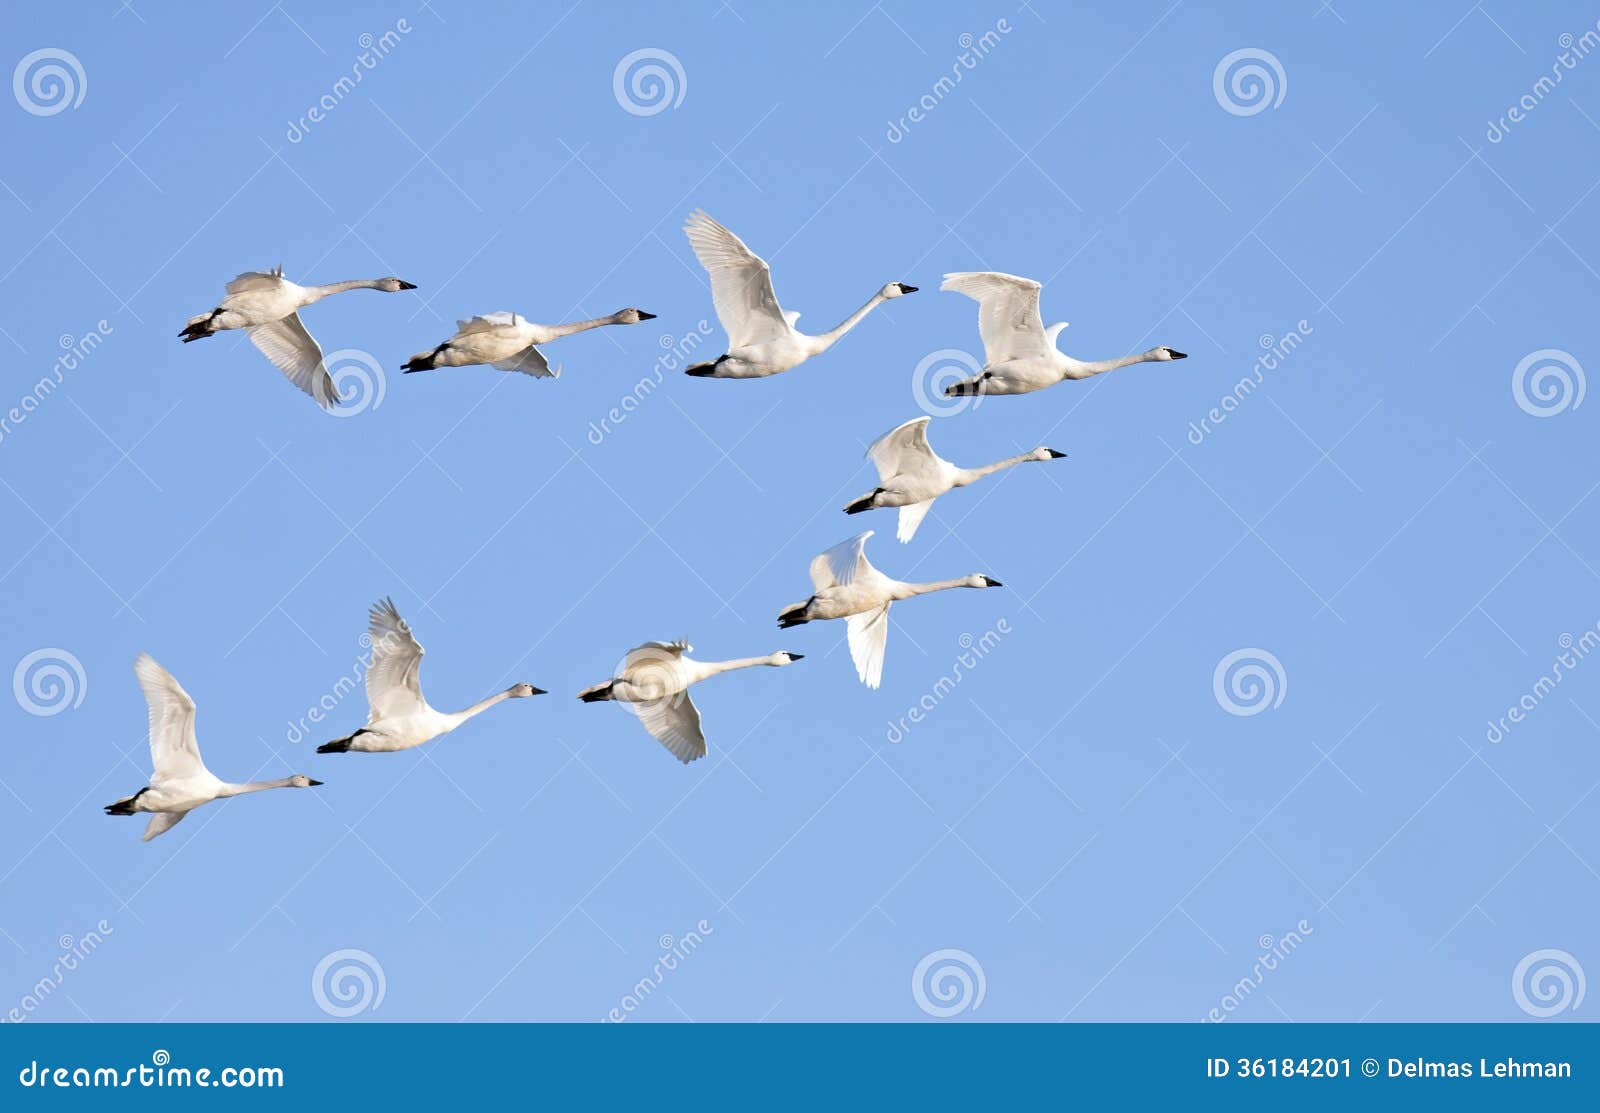 tundra swans in flight